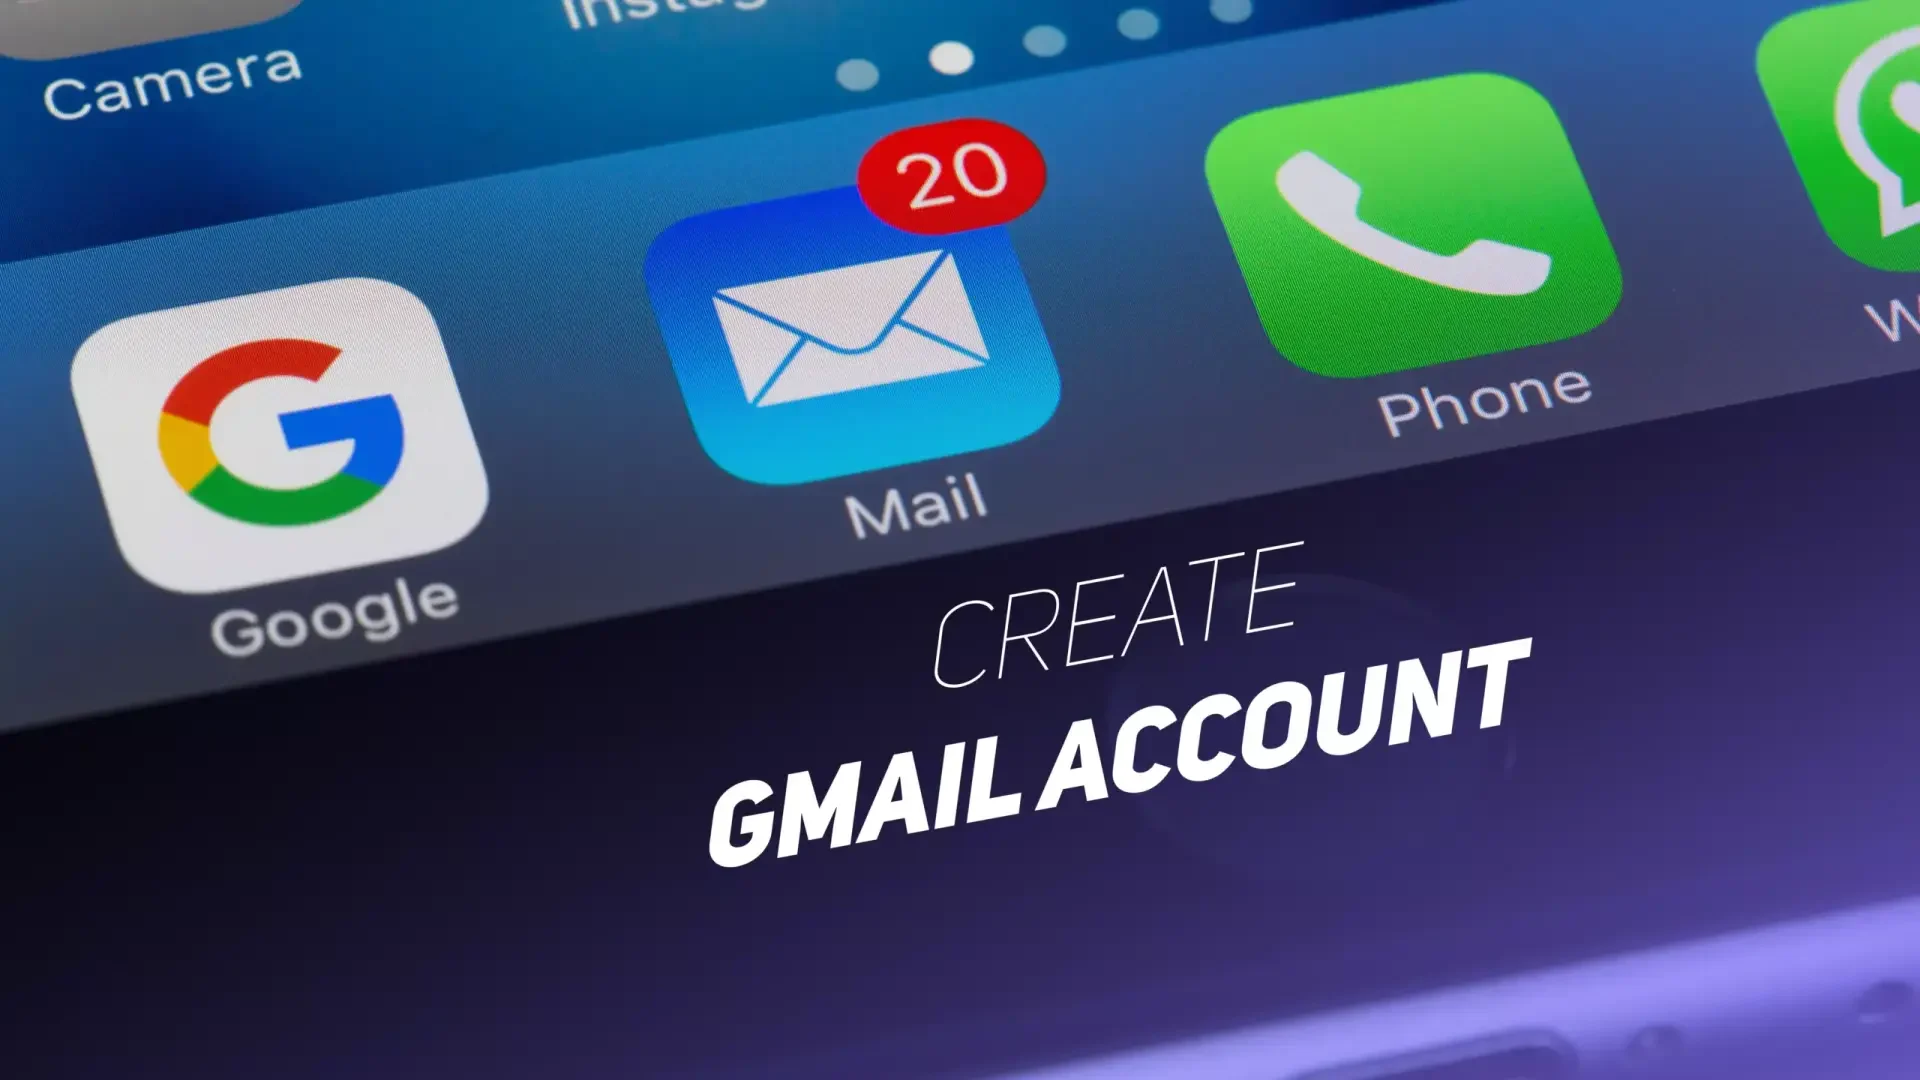 create gmail account